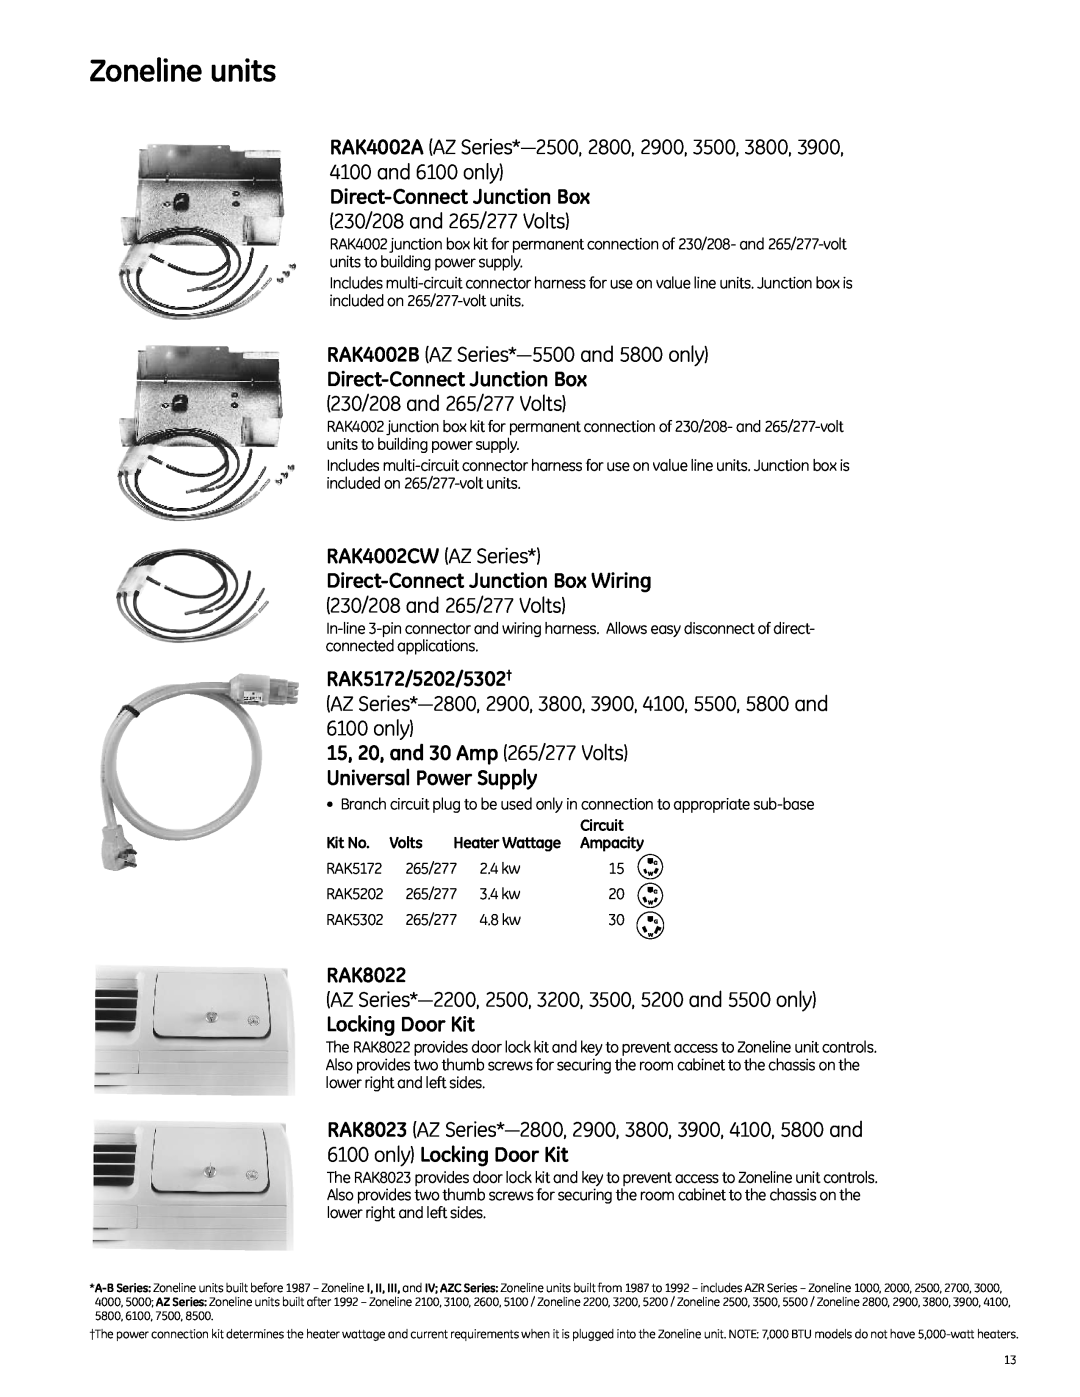 GE 2010 Direct-ConnectJunction Box Wiring, RAK5172/5202/5302†, 15, 20, and 30 Amp 265/277 Volts, RAK8022, Locking Door Kit 